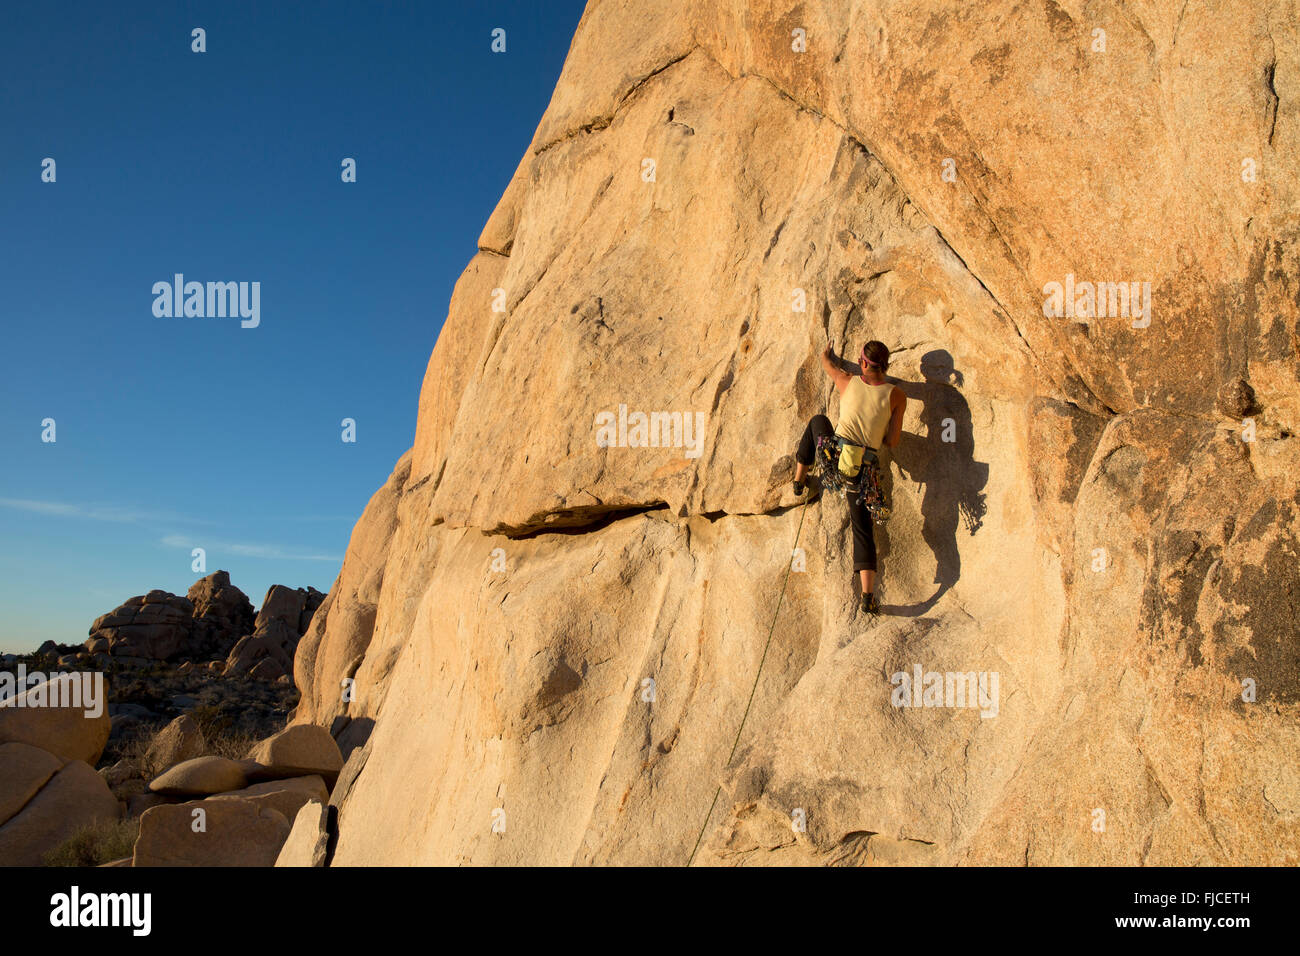 Woman Rock Climbing at Hidden Valley, Joshua Tree National Park California USA Stock Photo